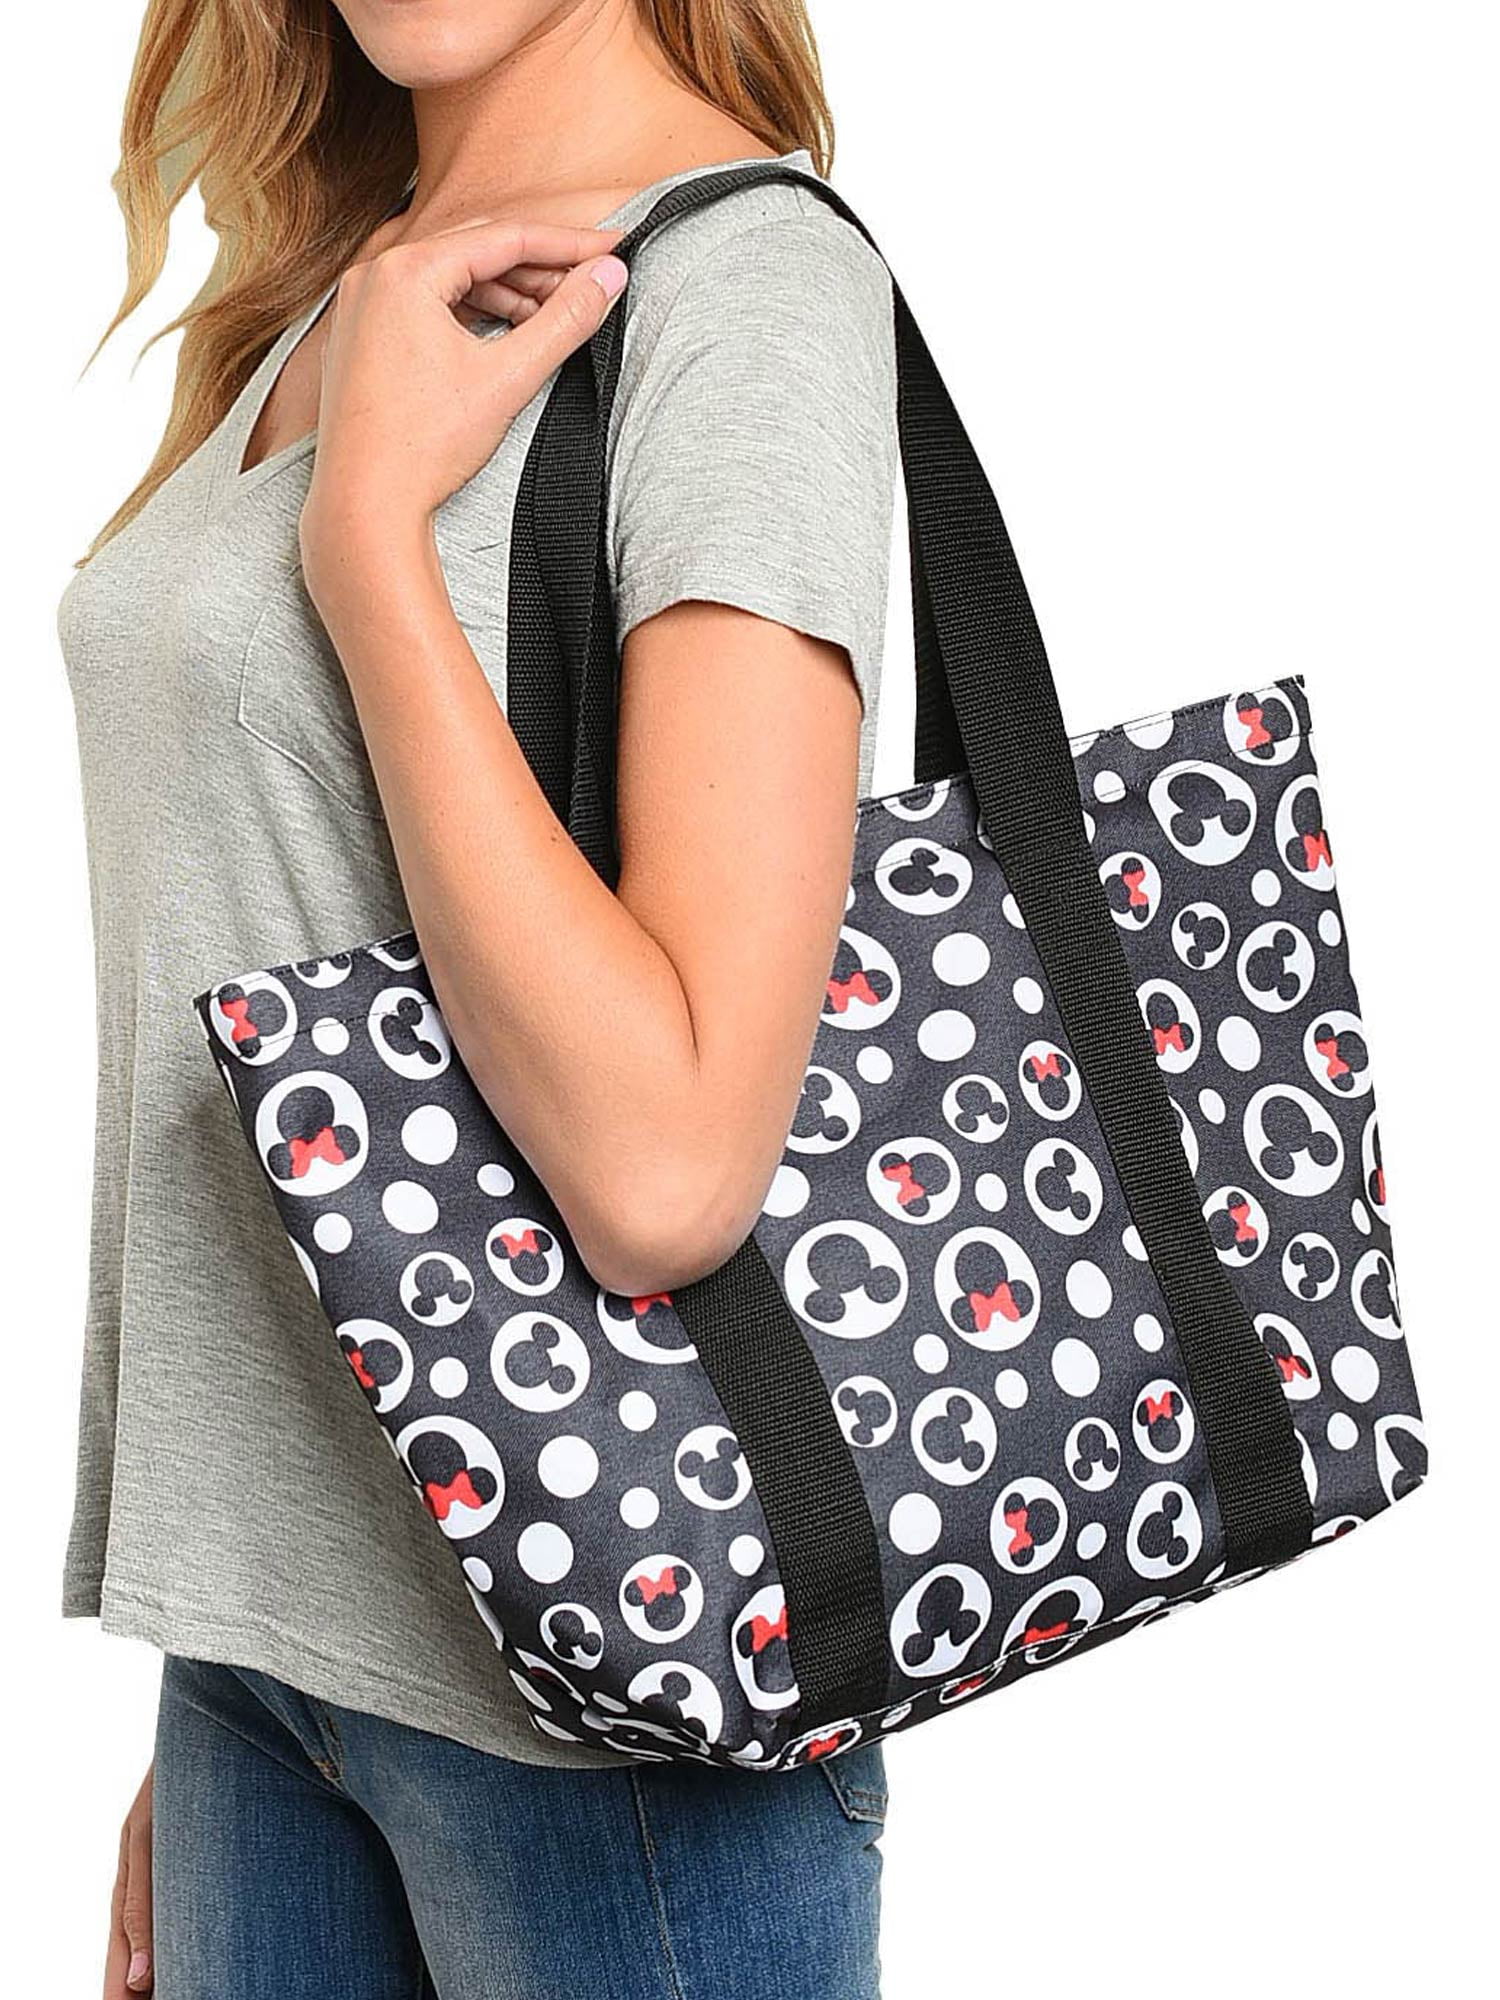 2019 Women Girl Mickey Mouse Handbag Shoulder Bag Purse Tote Messenger Hobo Bag 